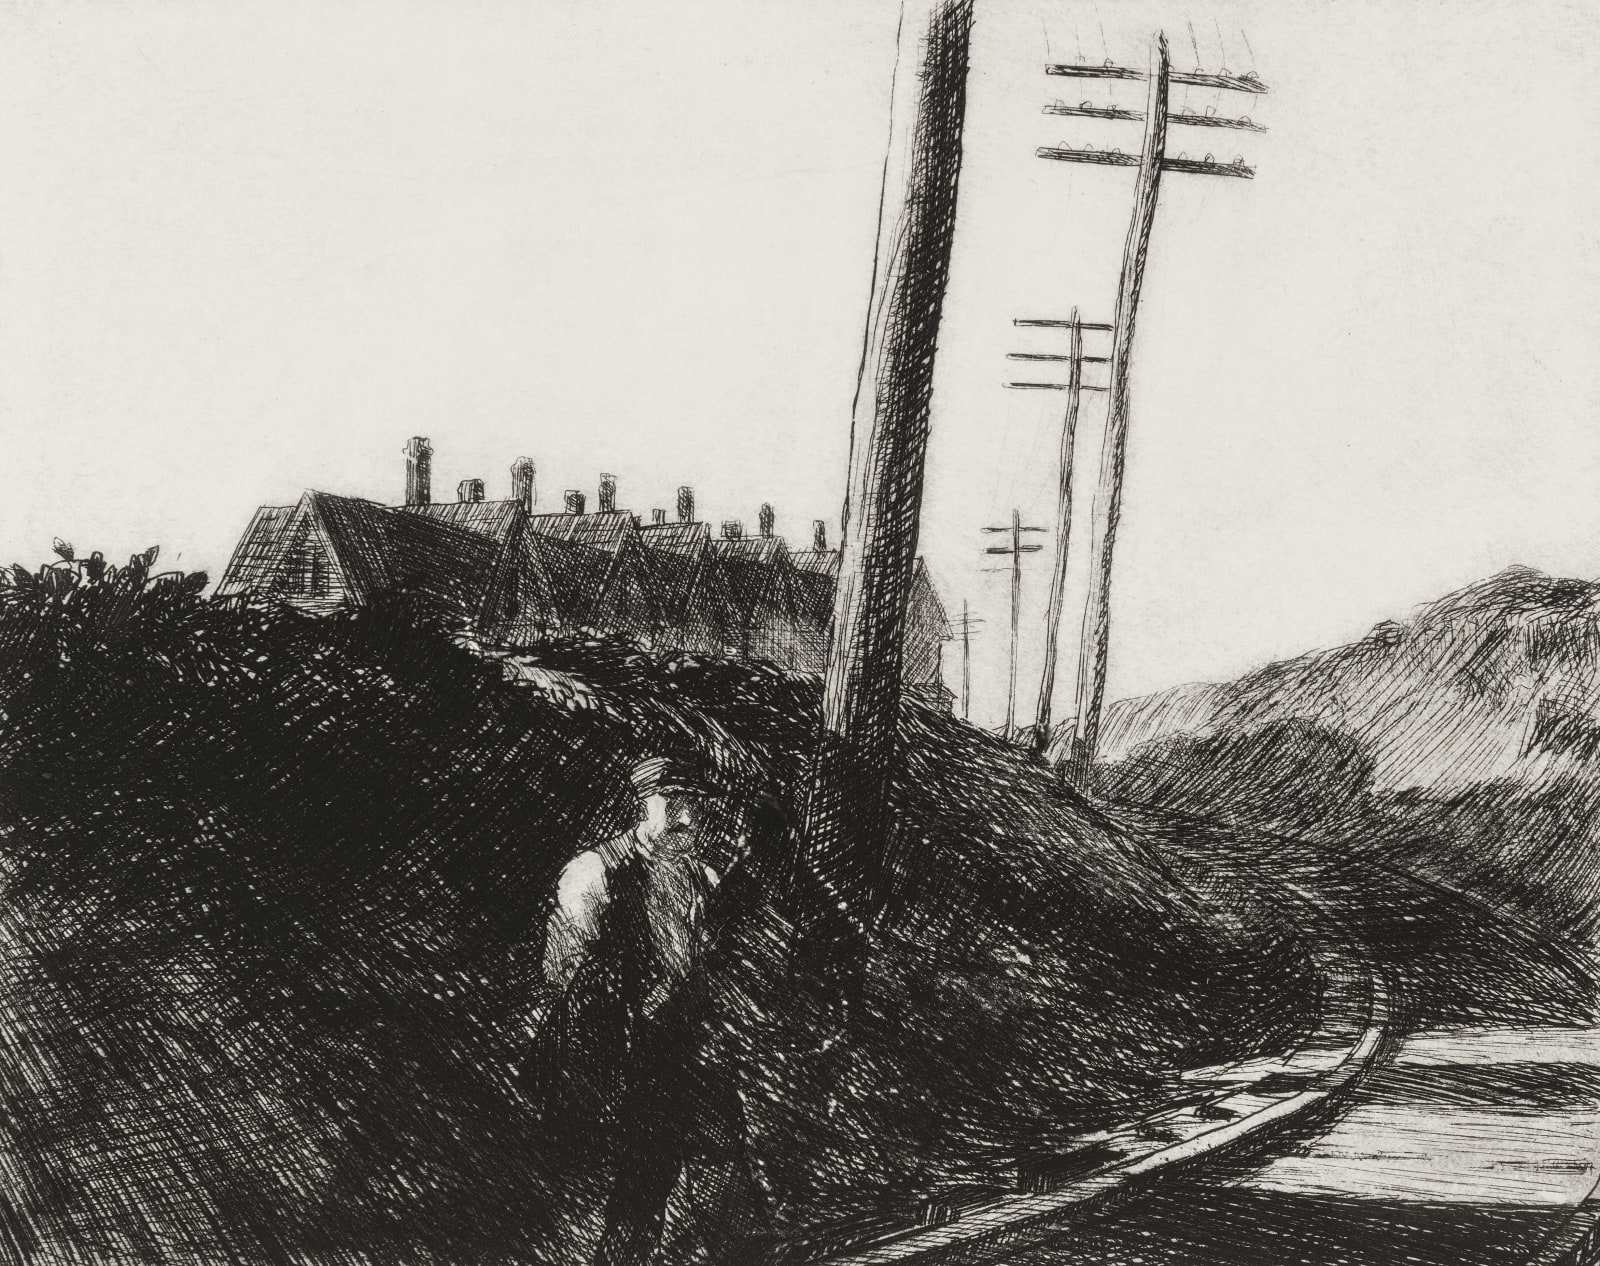 Edward Hopper, The Railroad, 1922